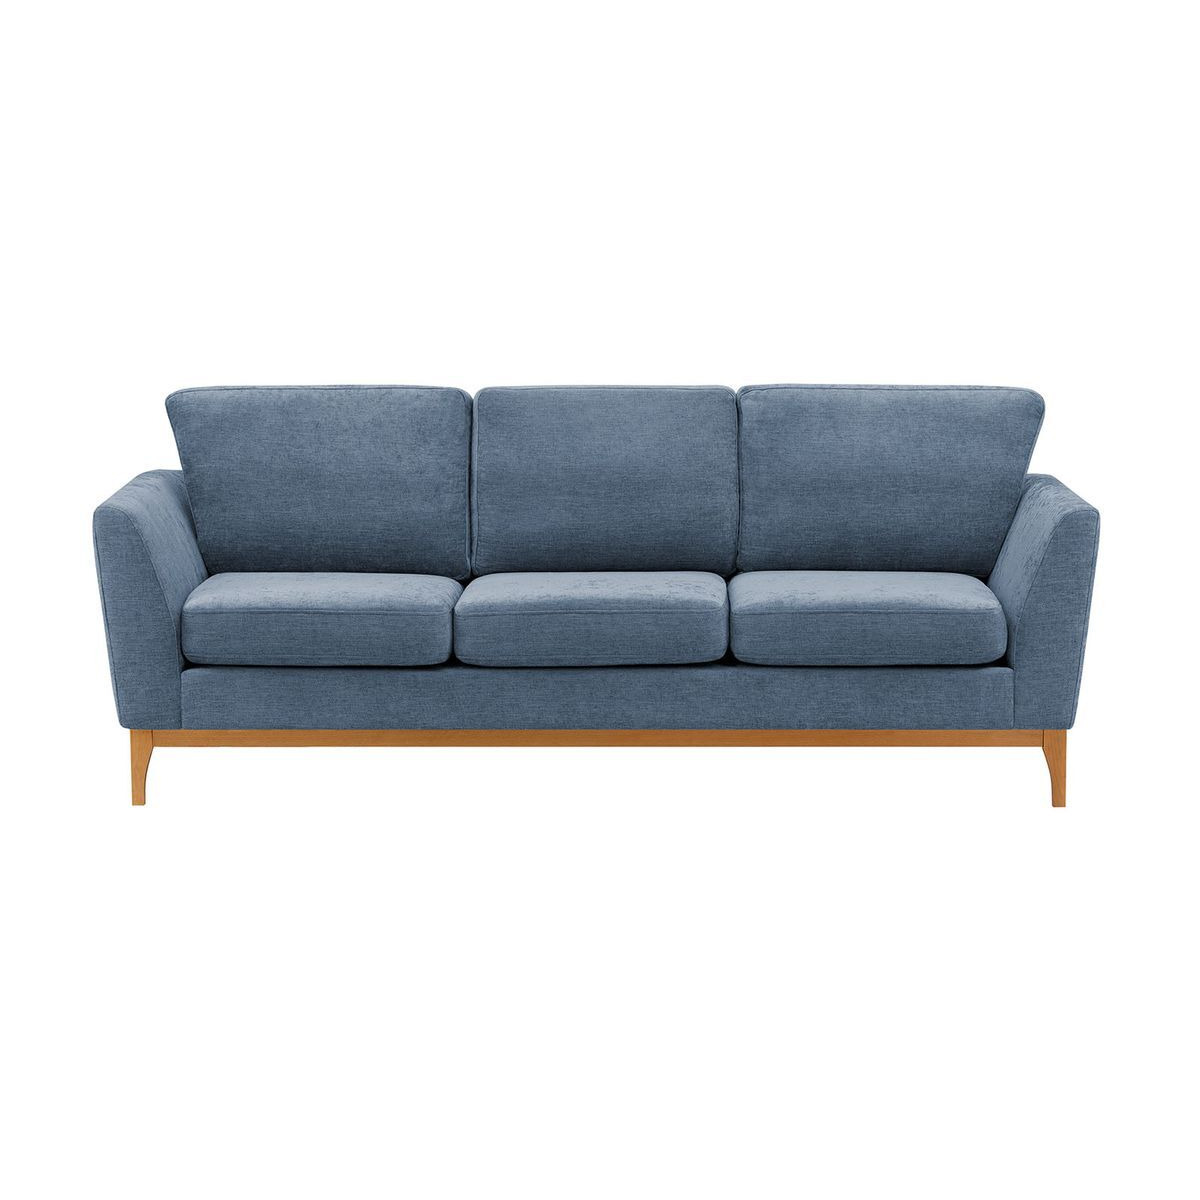 Malone 3 Seater Sofa, denim blue, Leg colour: like oak - image 1